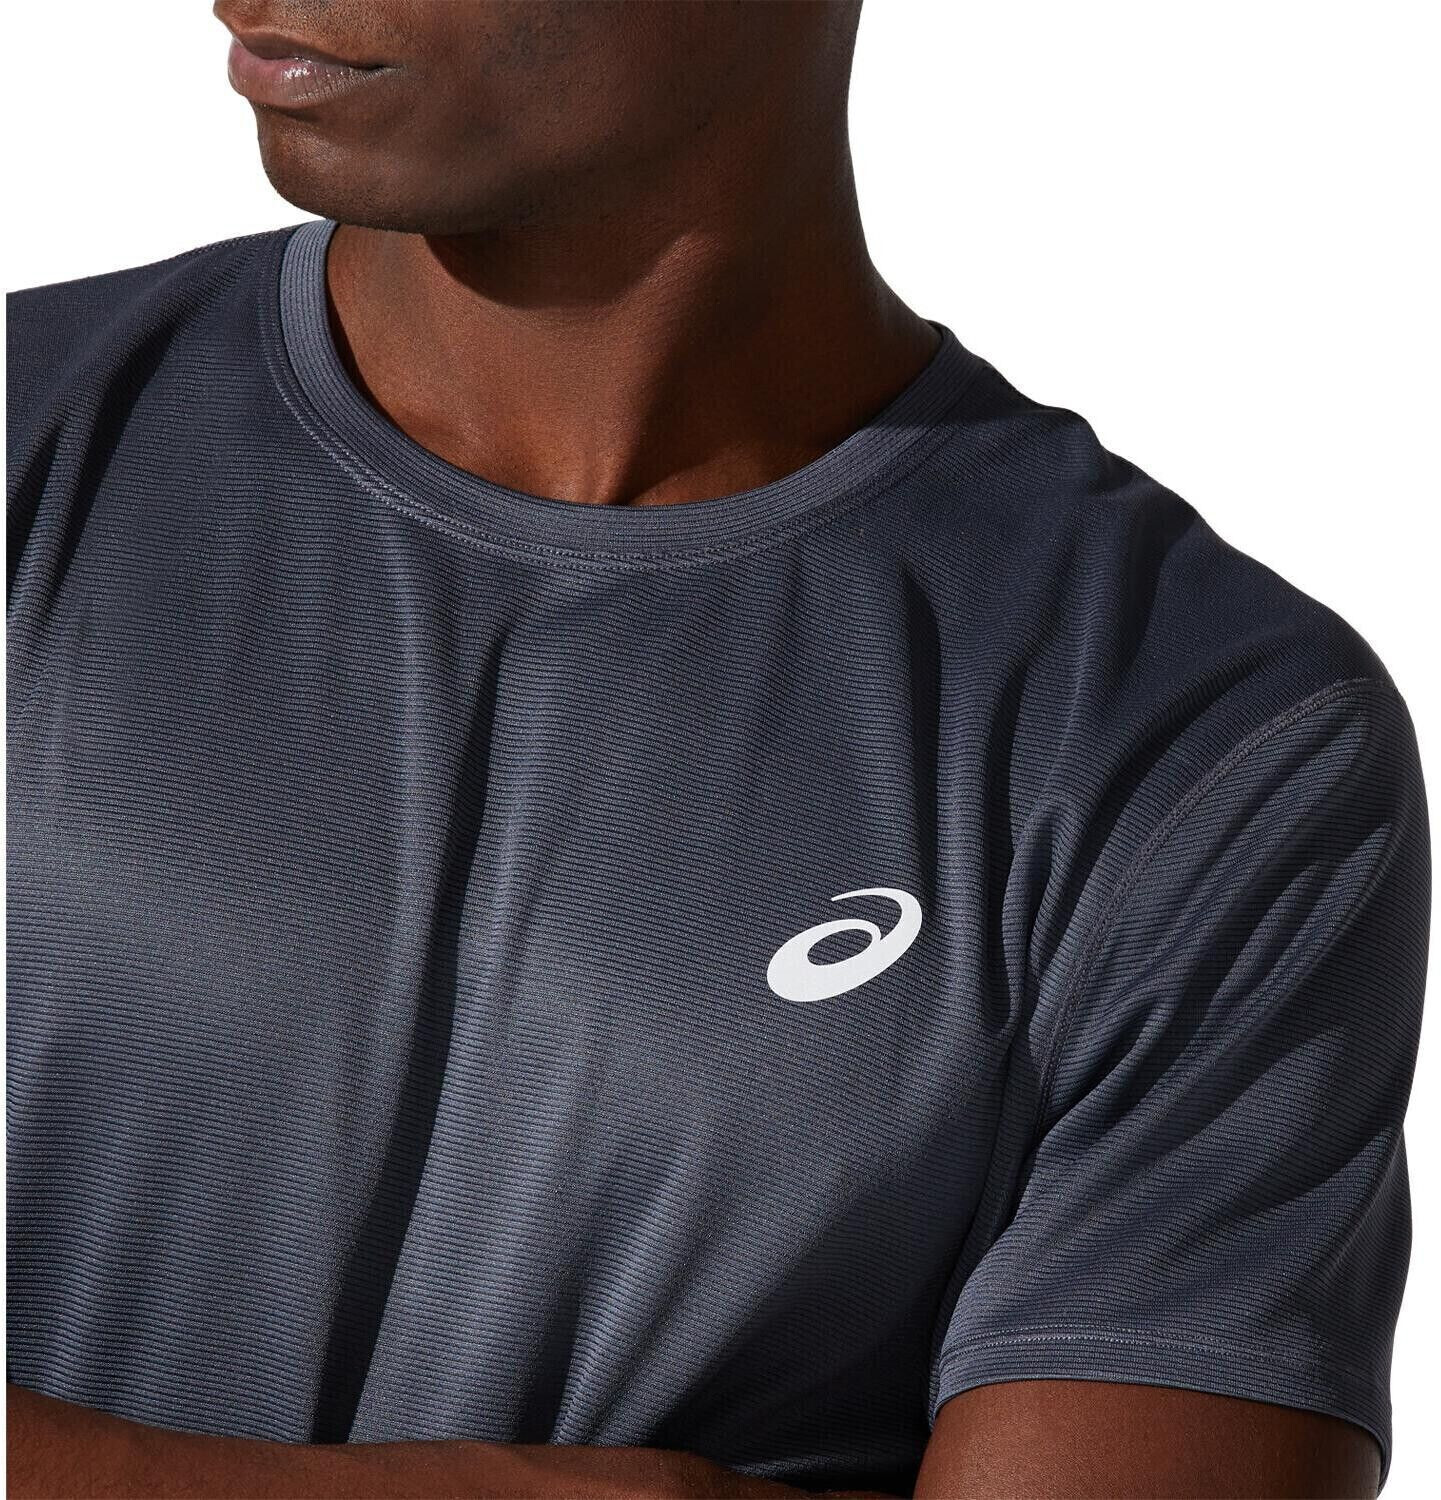 Asics Core short sleeves Top (2011C341) grey/white ab 21,99 € |  Preisvergleich bei